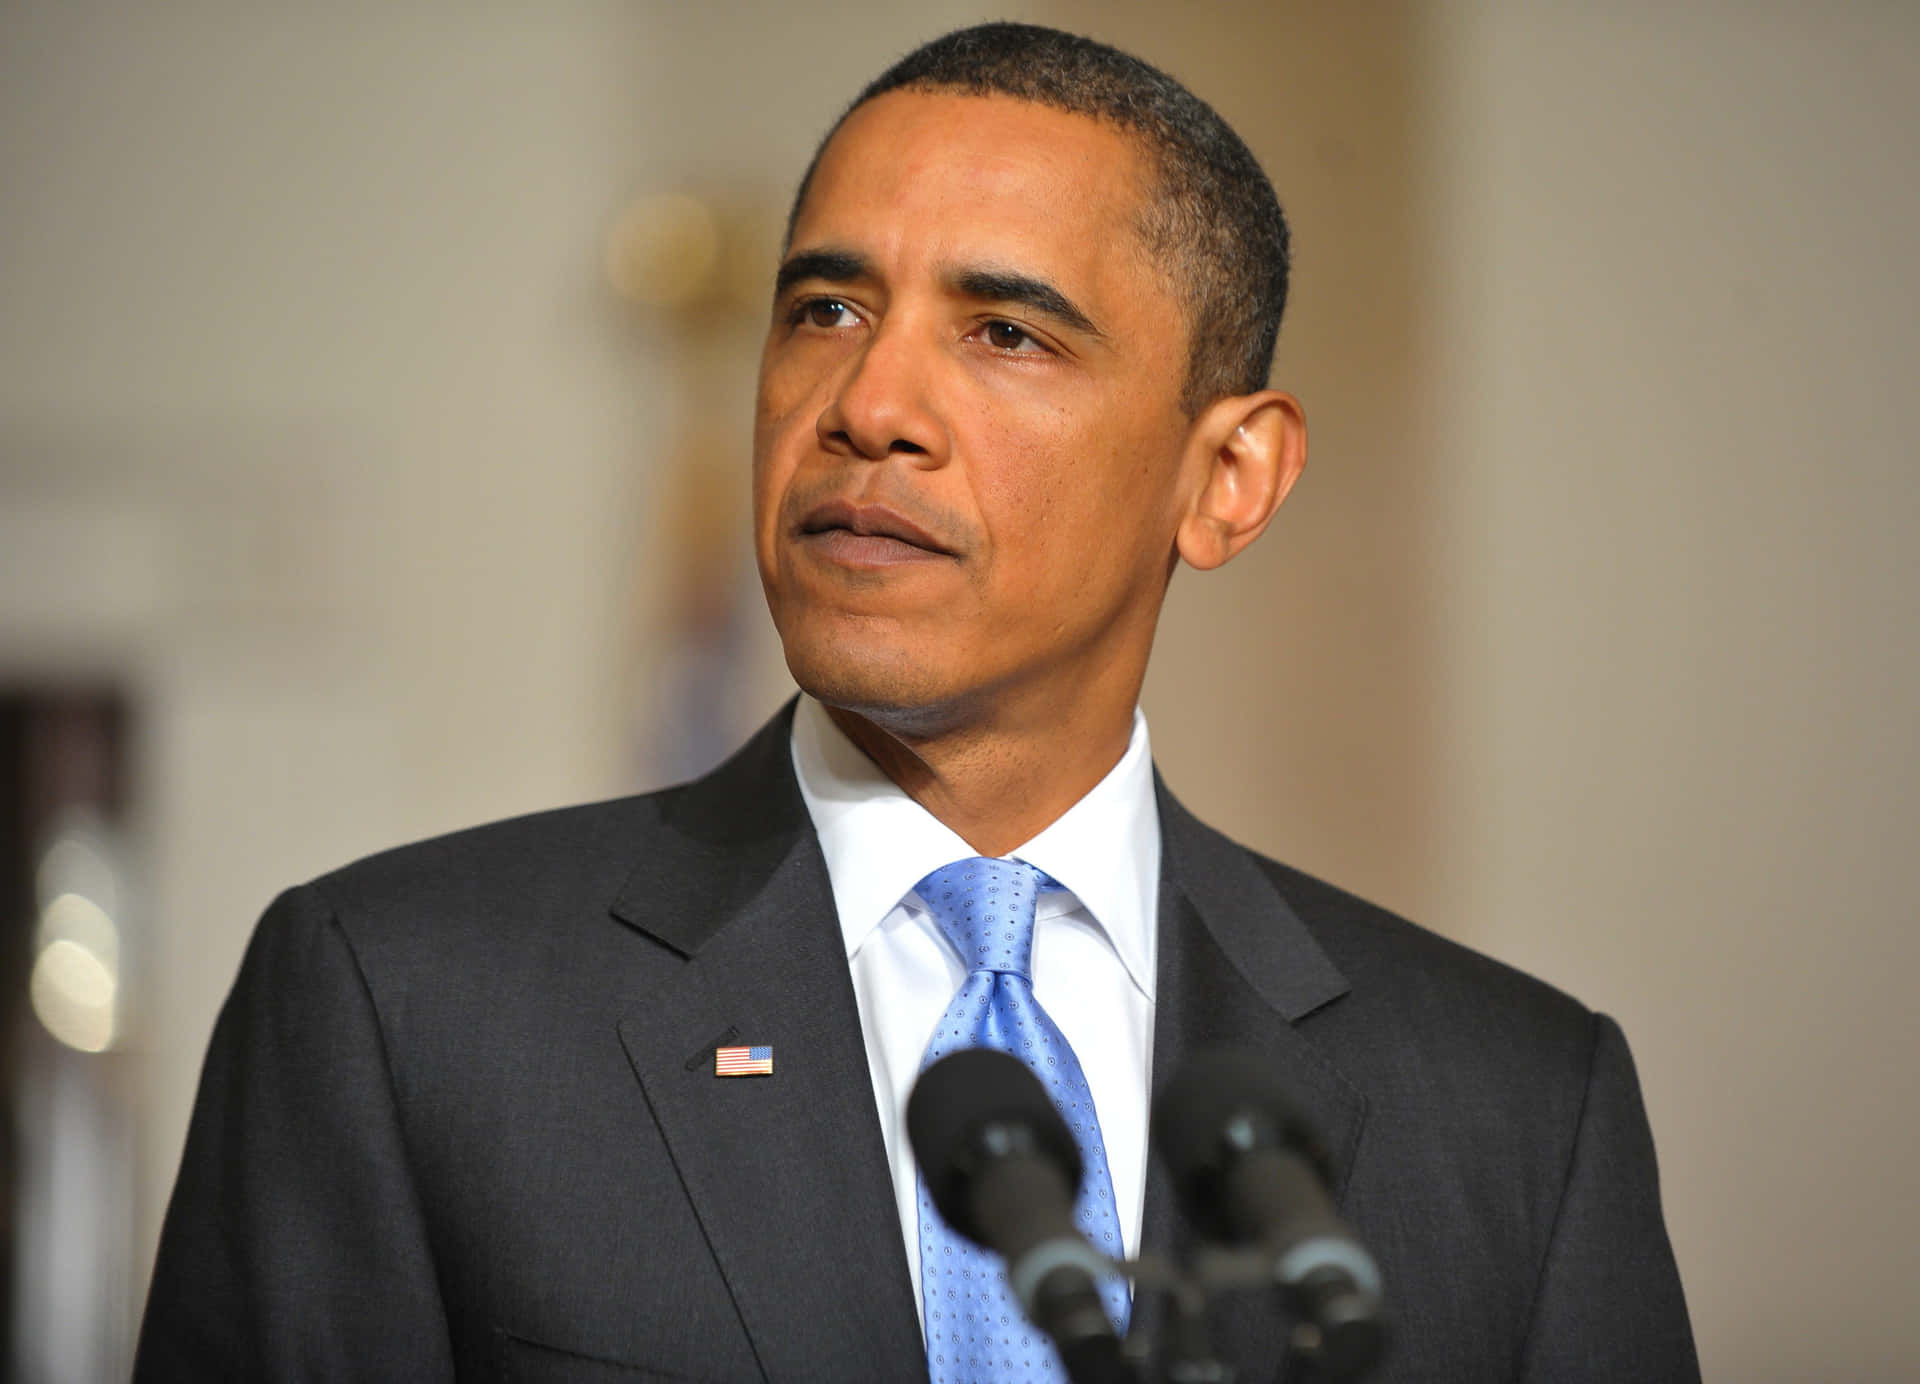 Tidigarepresident Barack Obama Leder En Folkmassa Med Sin Kampanjvalspråk Från 2008.